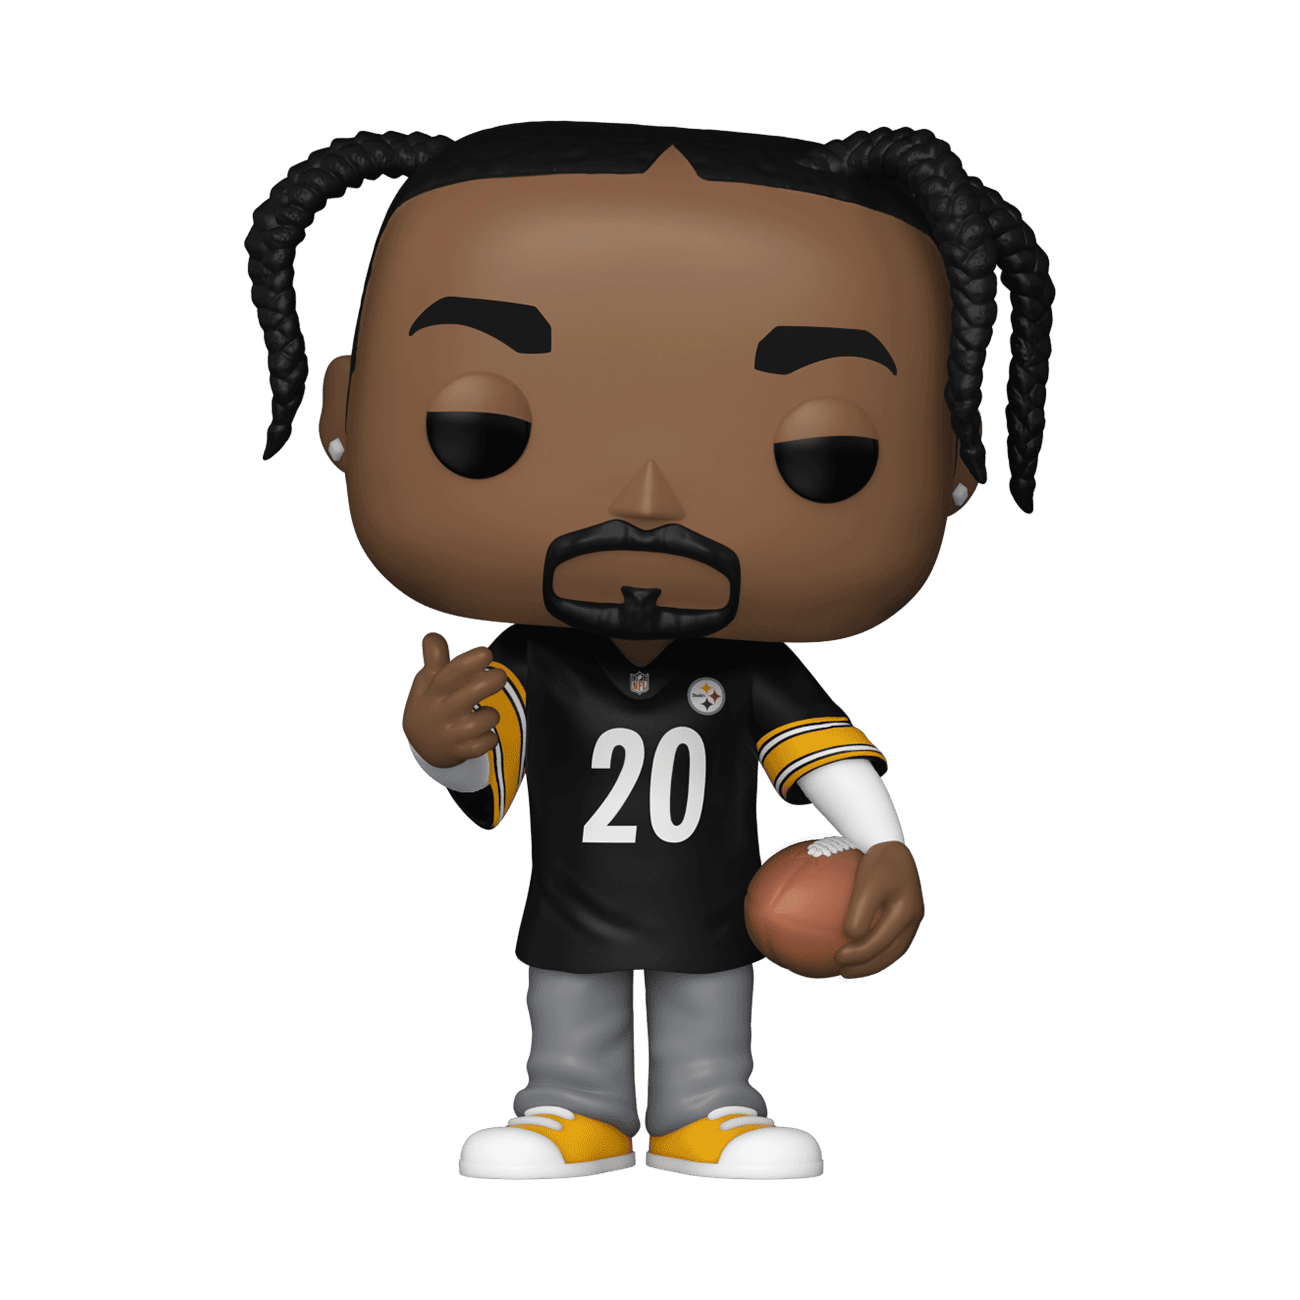 Funko Pop Snoop Dogg 304 Snoop Dogg Jersey Steelers